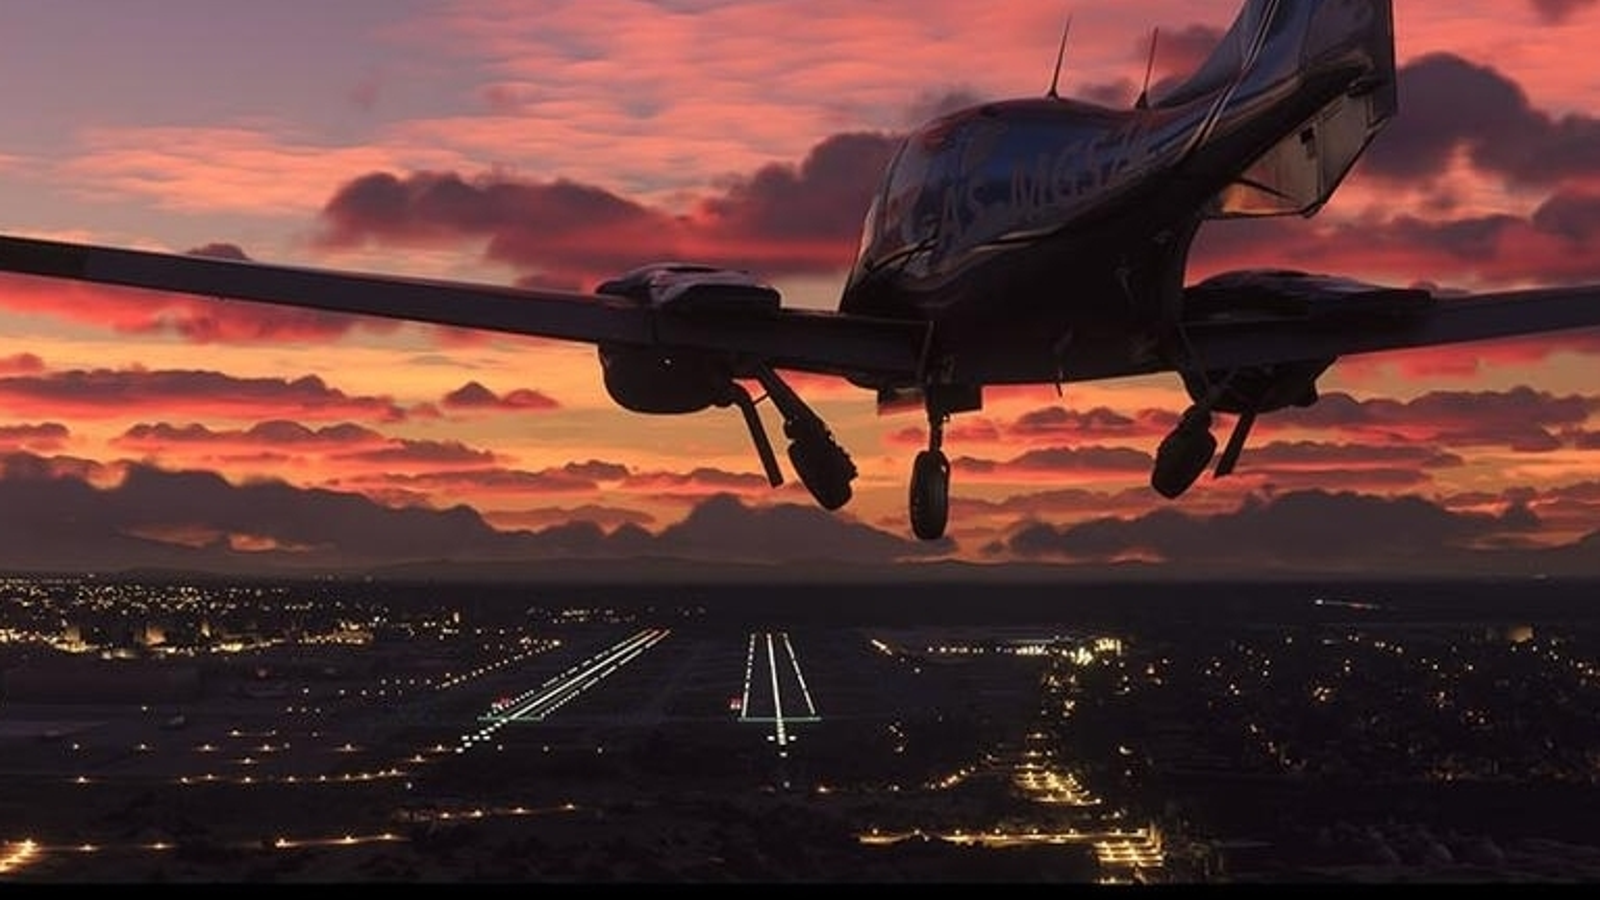 Microsoft Flight Simulator X (FSX) 2006 Official Trailer Video 